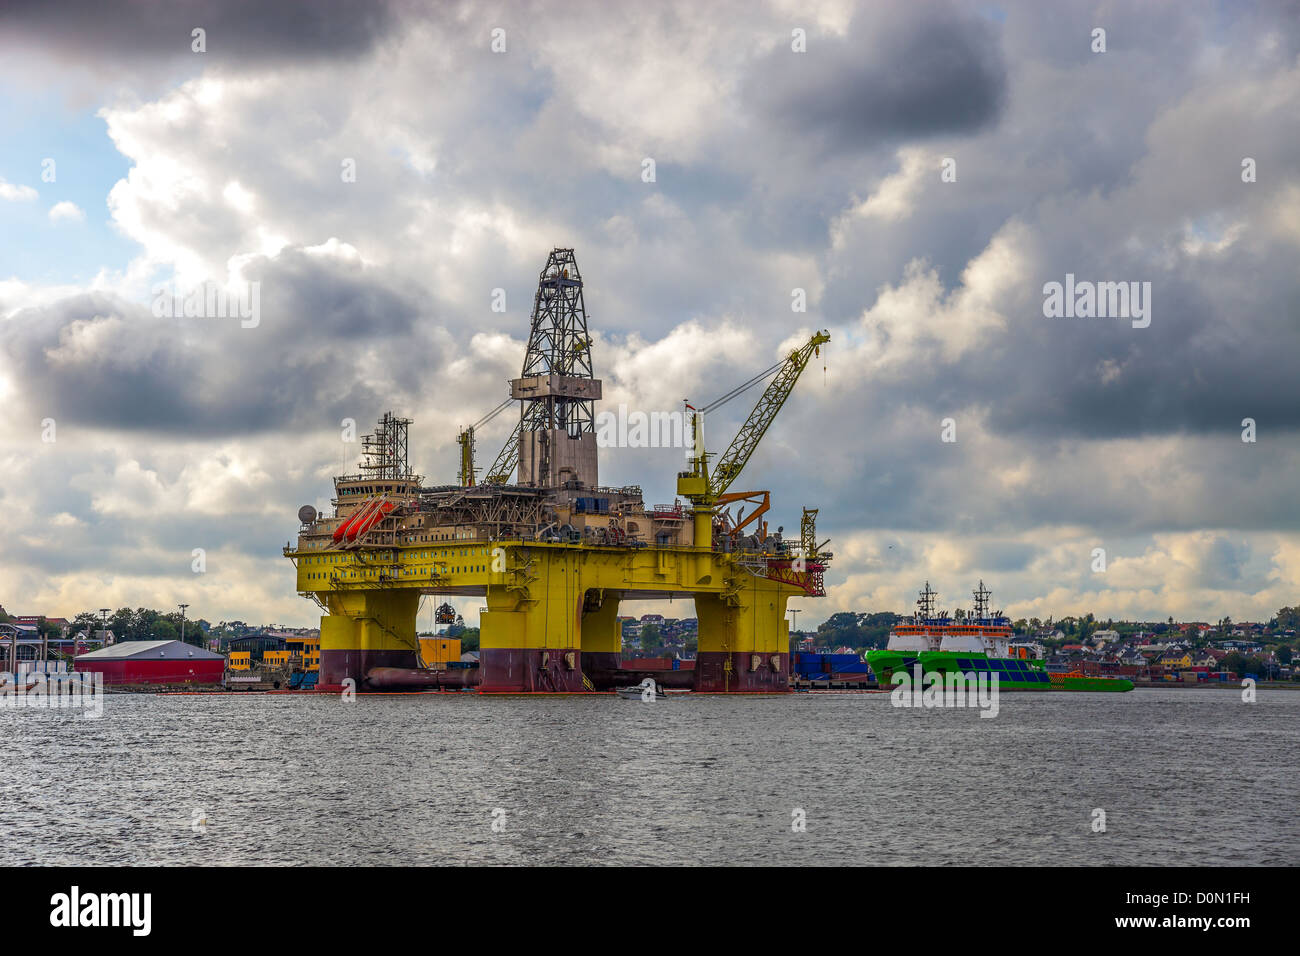 Oil rig in the Norwegian port of Sandnes. Stock Photo